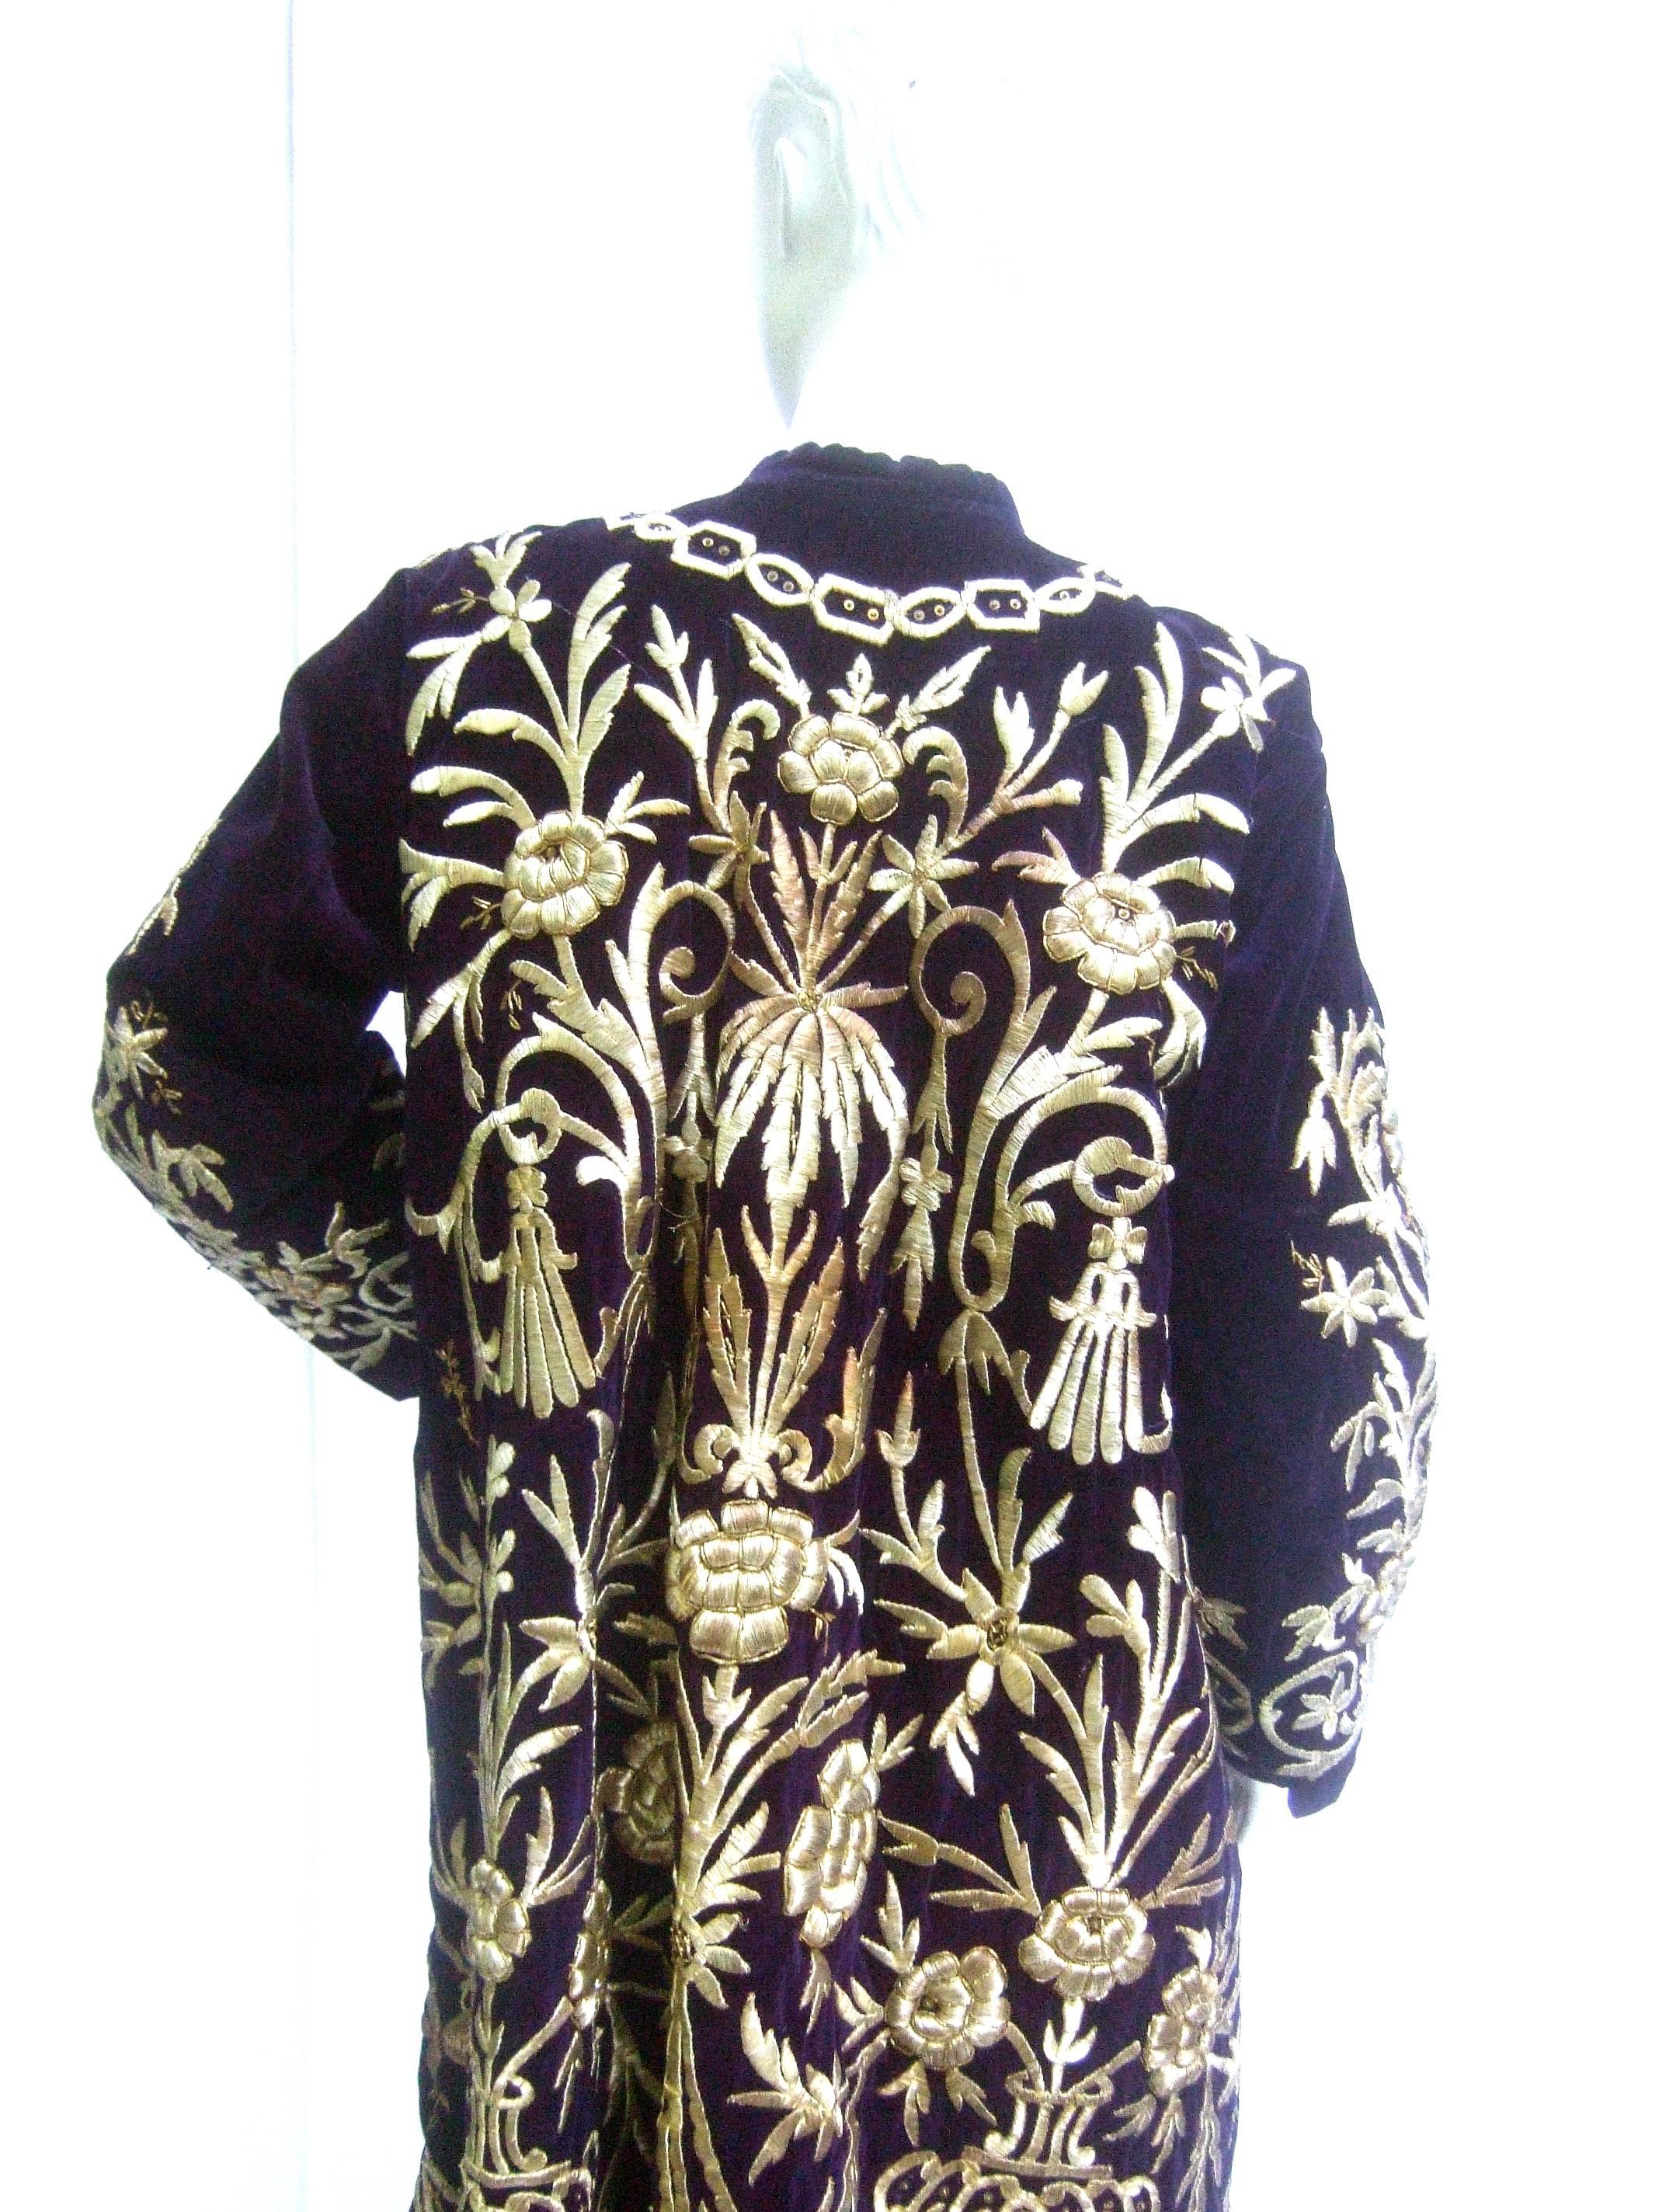 Exquisite Museum Worthy Aubergene Velvet Embroidered Metallic Caftan Robe 3